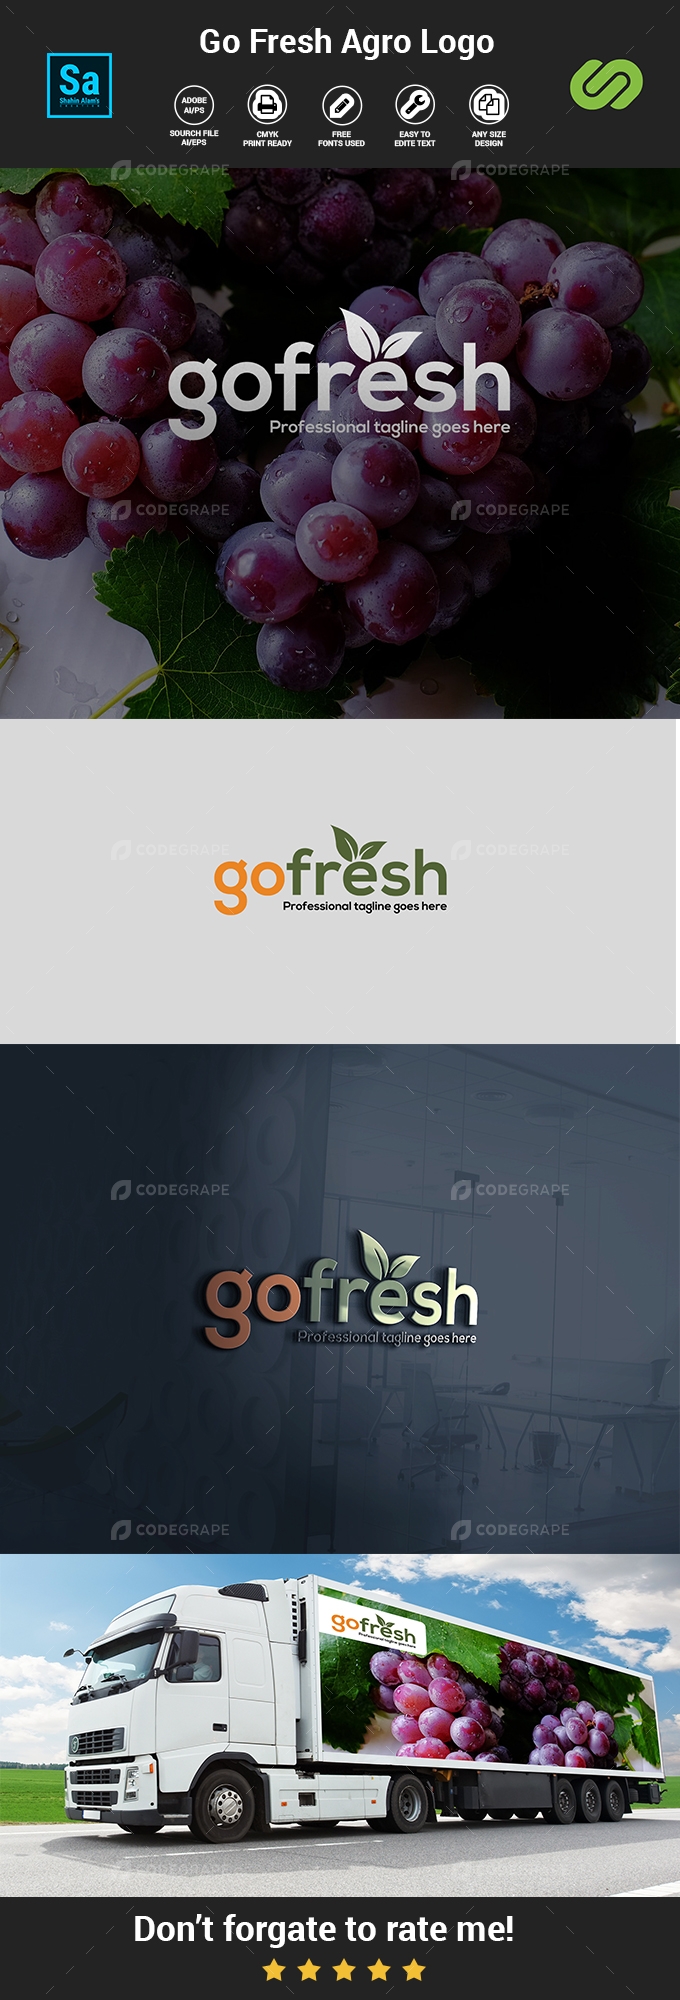 Go Fresh Agro Logo